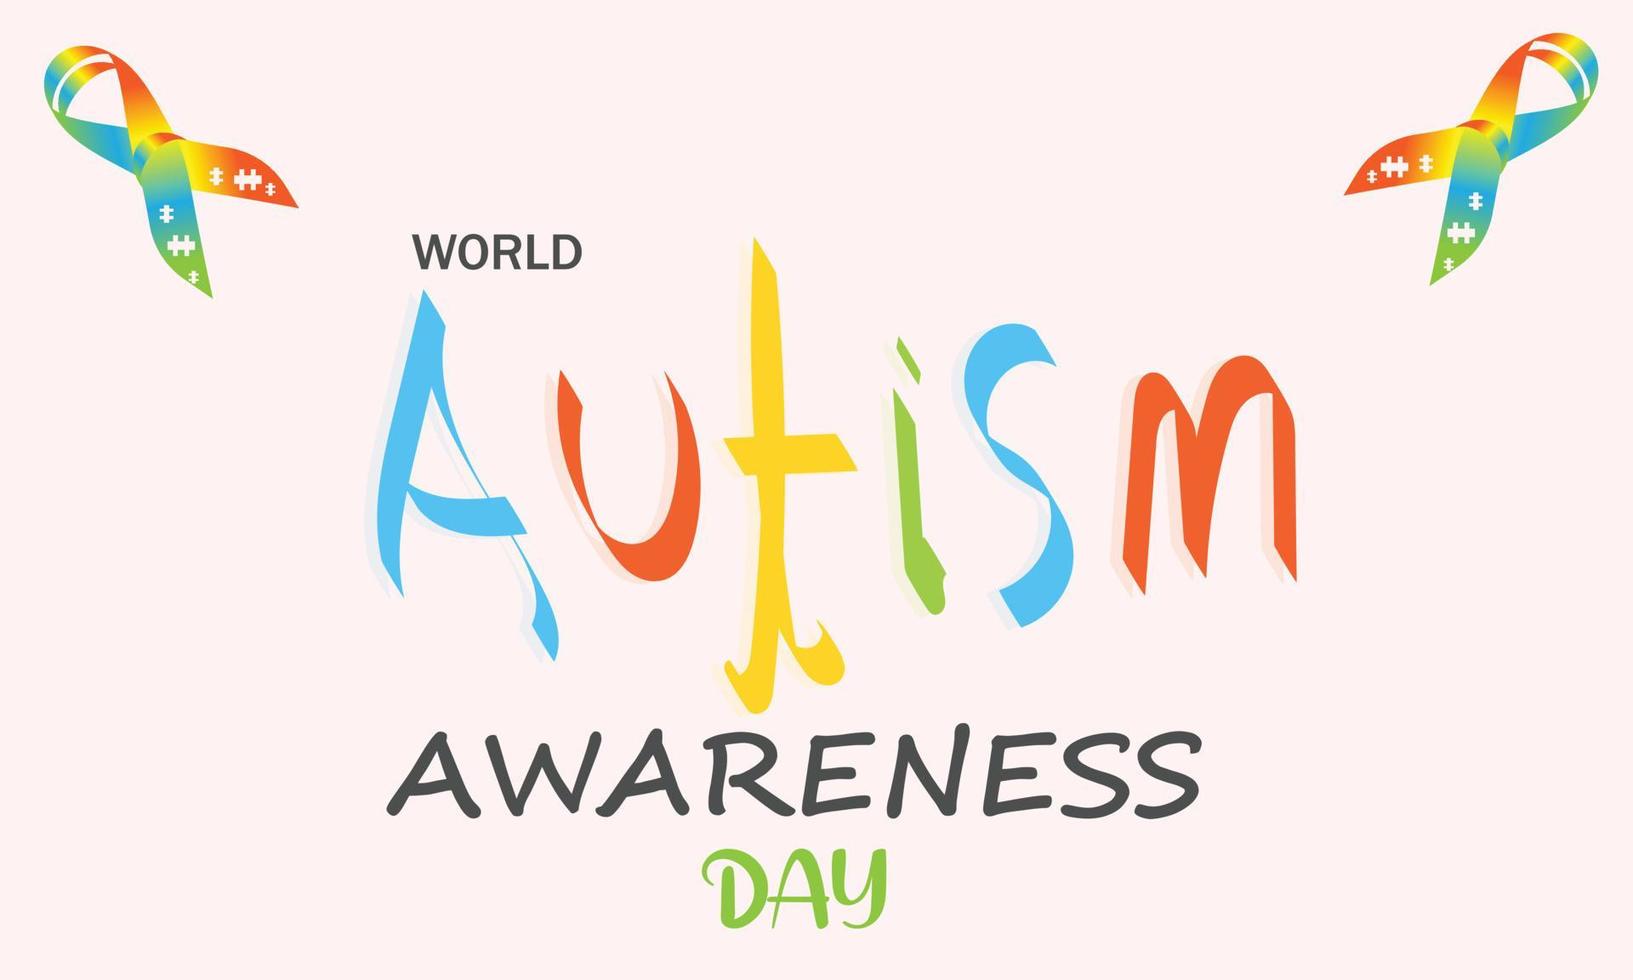 mundo autismo conciencia día abril 2. modelo para fondo, bandera, tarjeta, póster vector